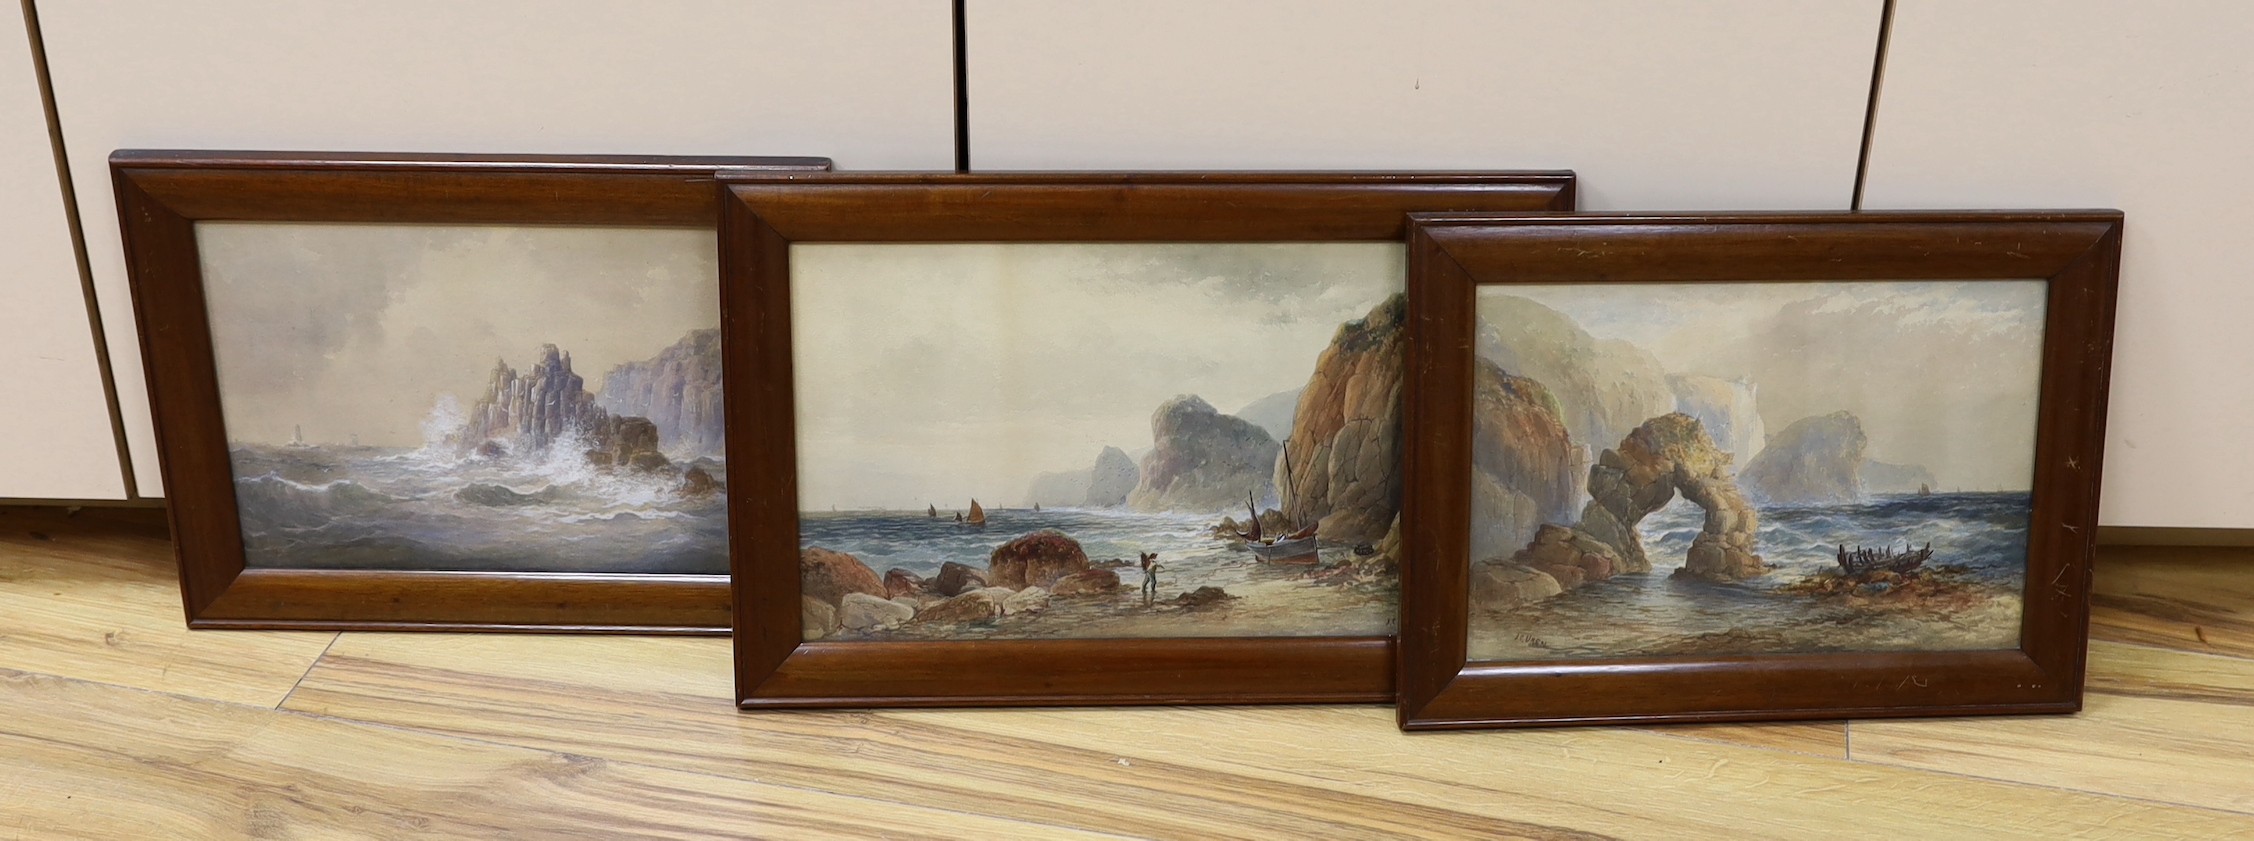 John Clarkson Uren (1845-1932), three watercolours, Coastal scenes, signed, one dated 1880, largest 23 x 40cm